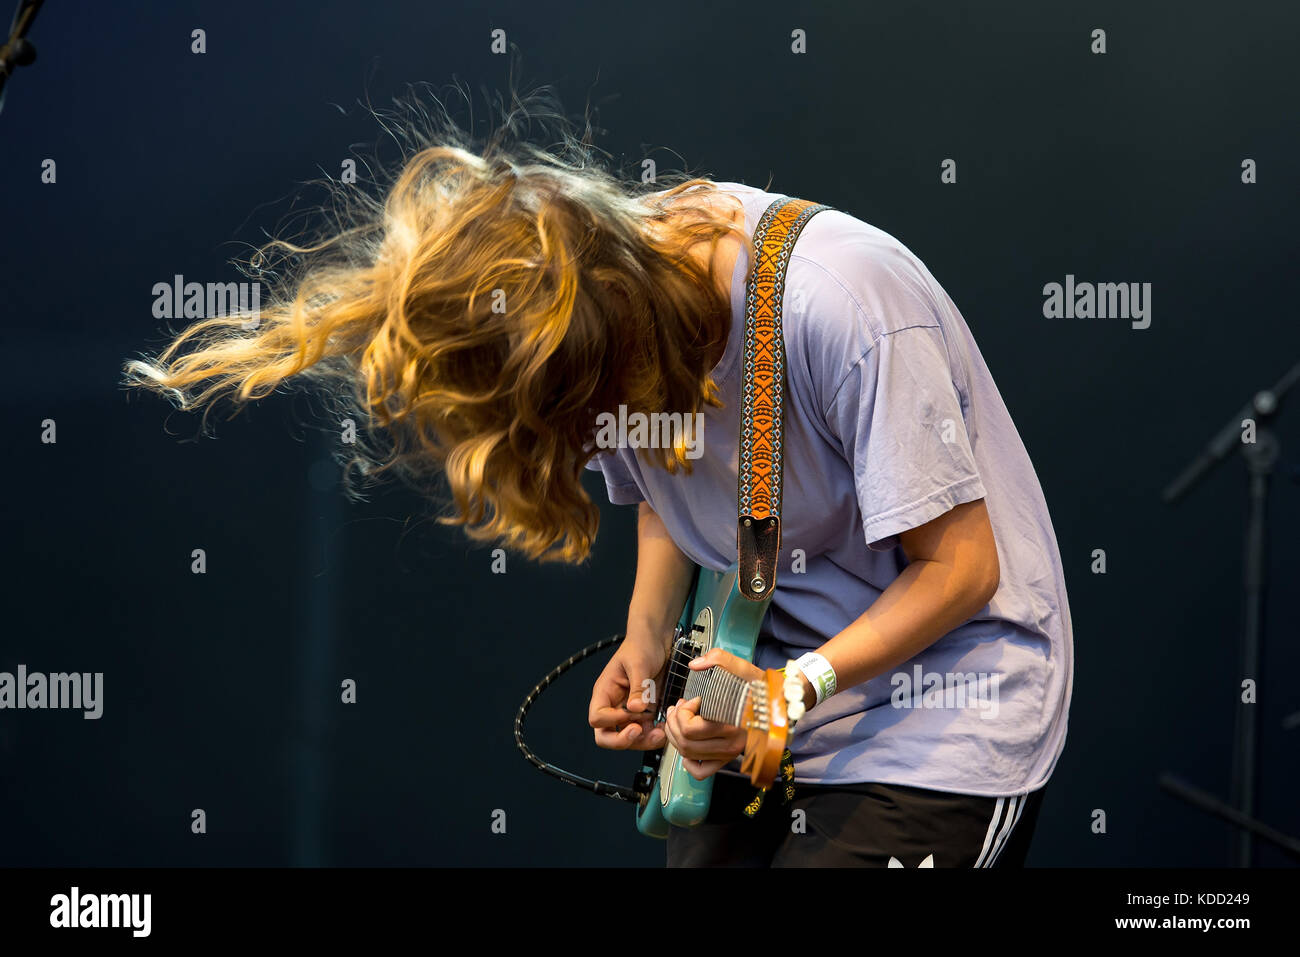 BENICASSIM, SPAIN - JUL 15: Marika Hackman (folk rock music band) perform in concert at FIB Festival on July 15, 2017 in Benicassim, Spain. Stock Photo